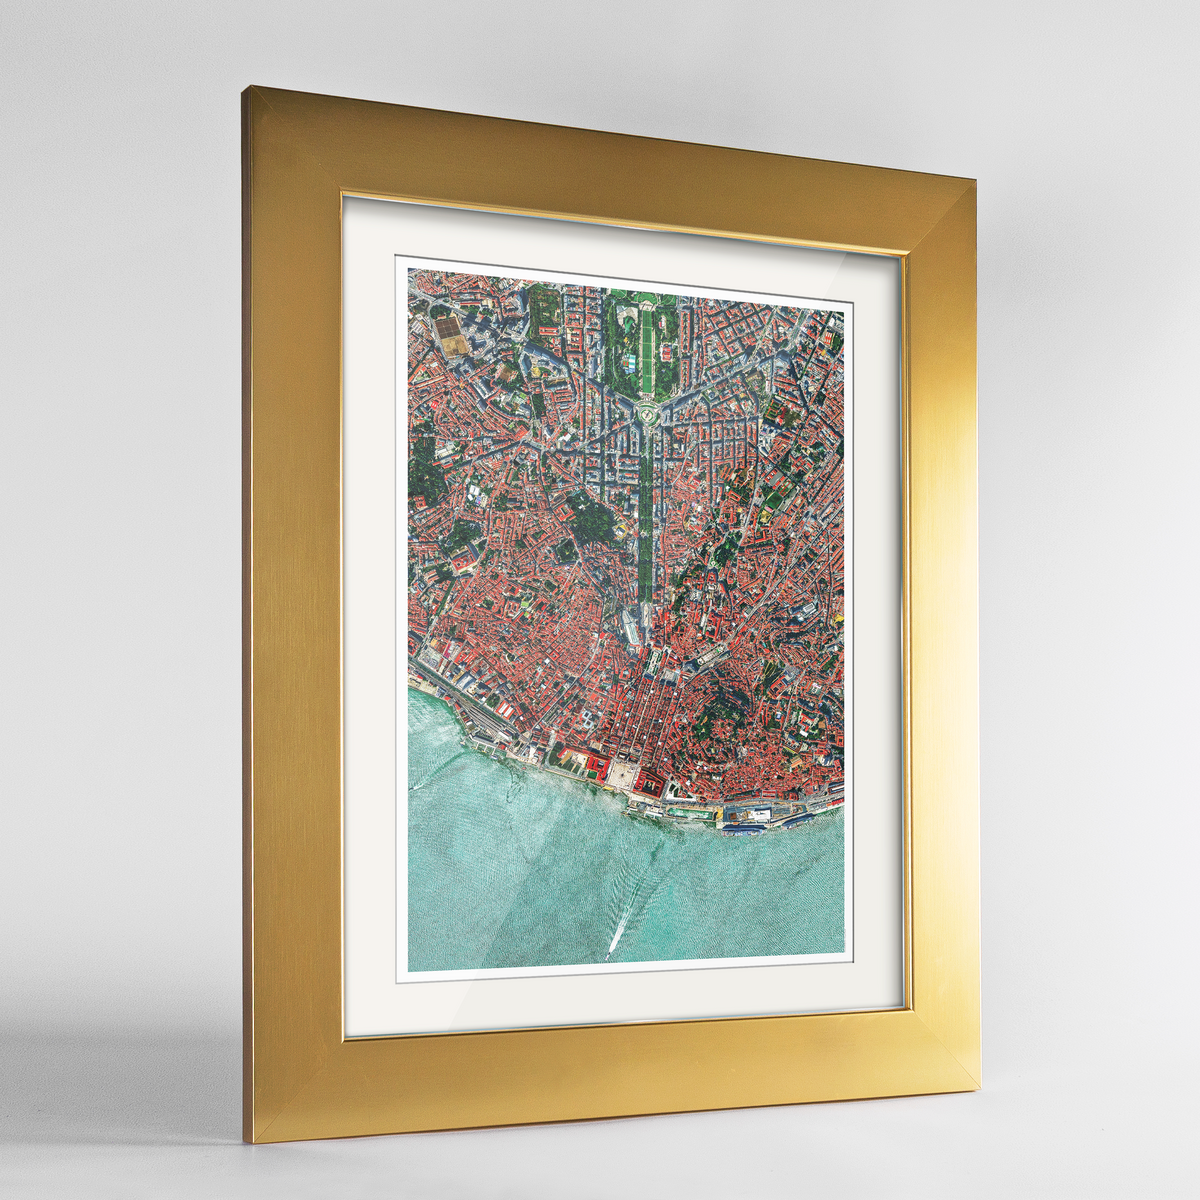 Lisbon Earth Photography Art Print - Framed